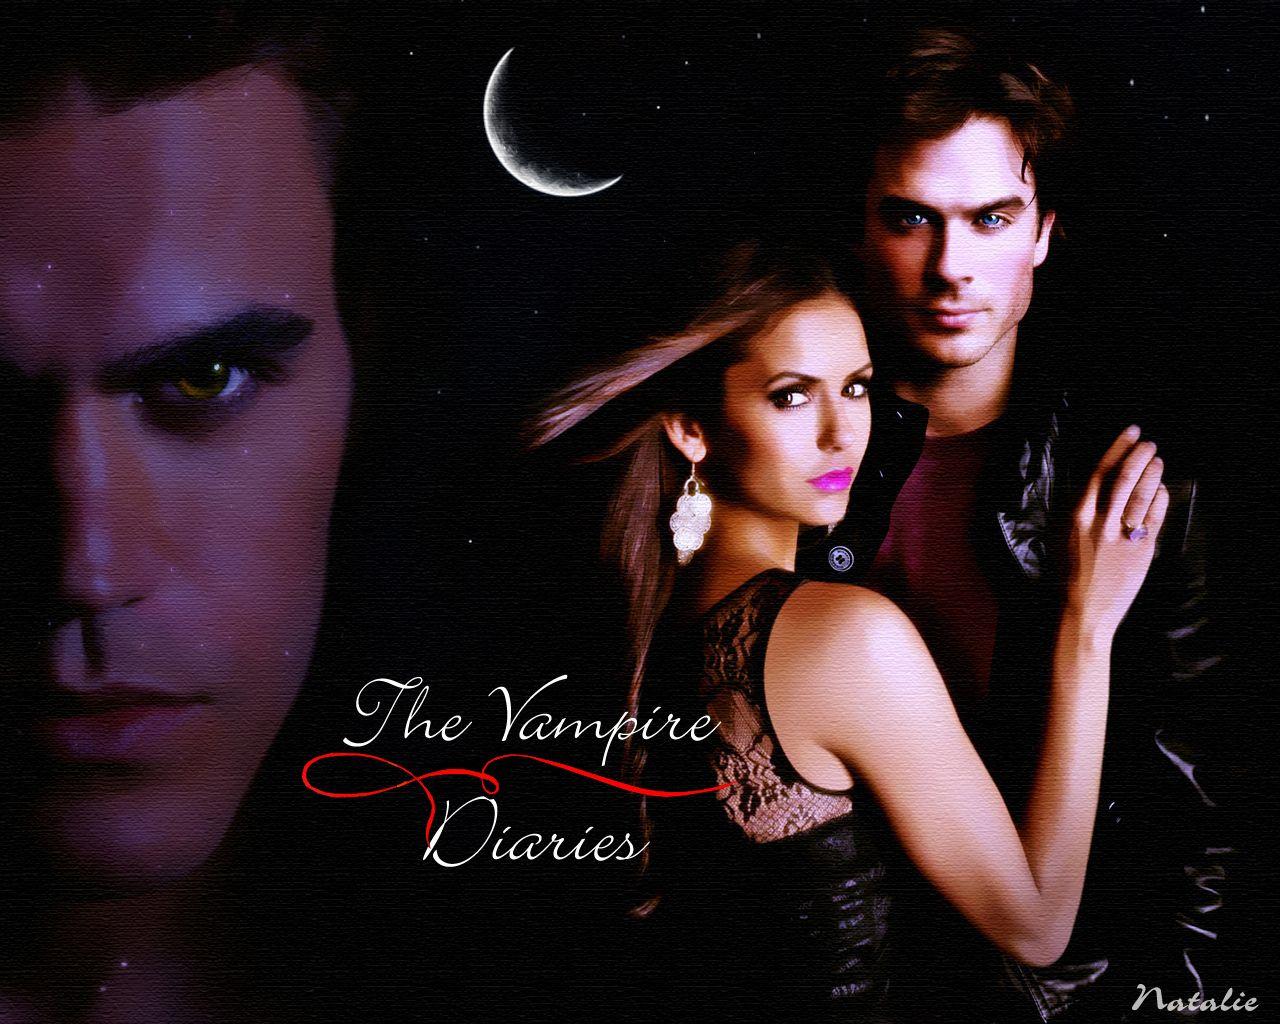 Stefan Elena Damon Vampire Diaries Wallpaper. The Vampire